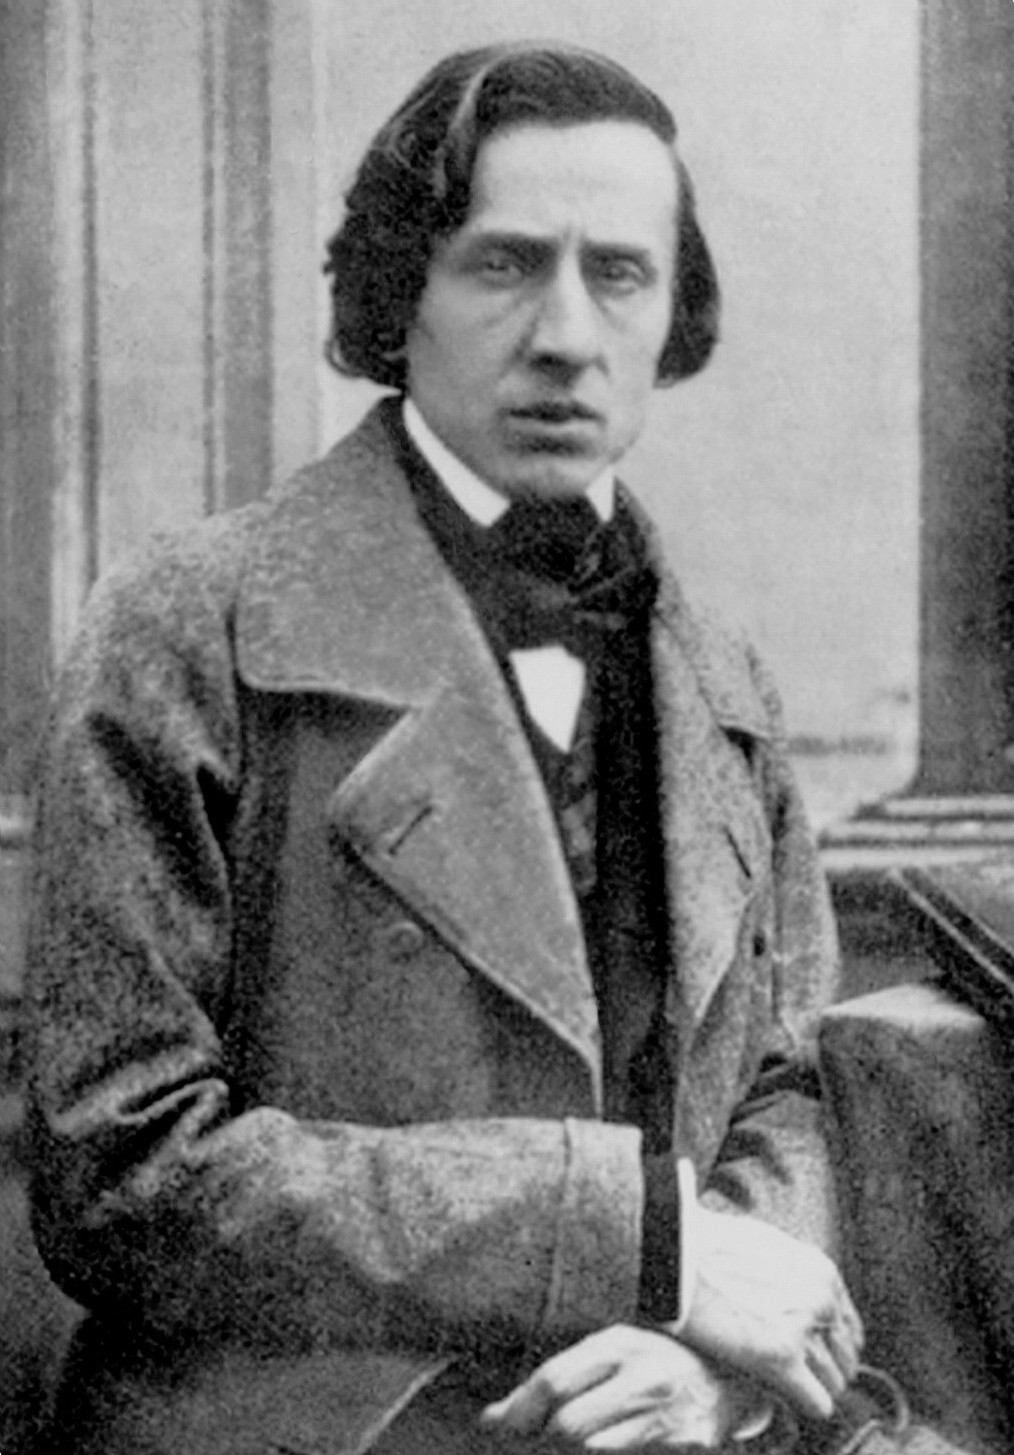 Frederic Chopin |